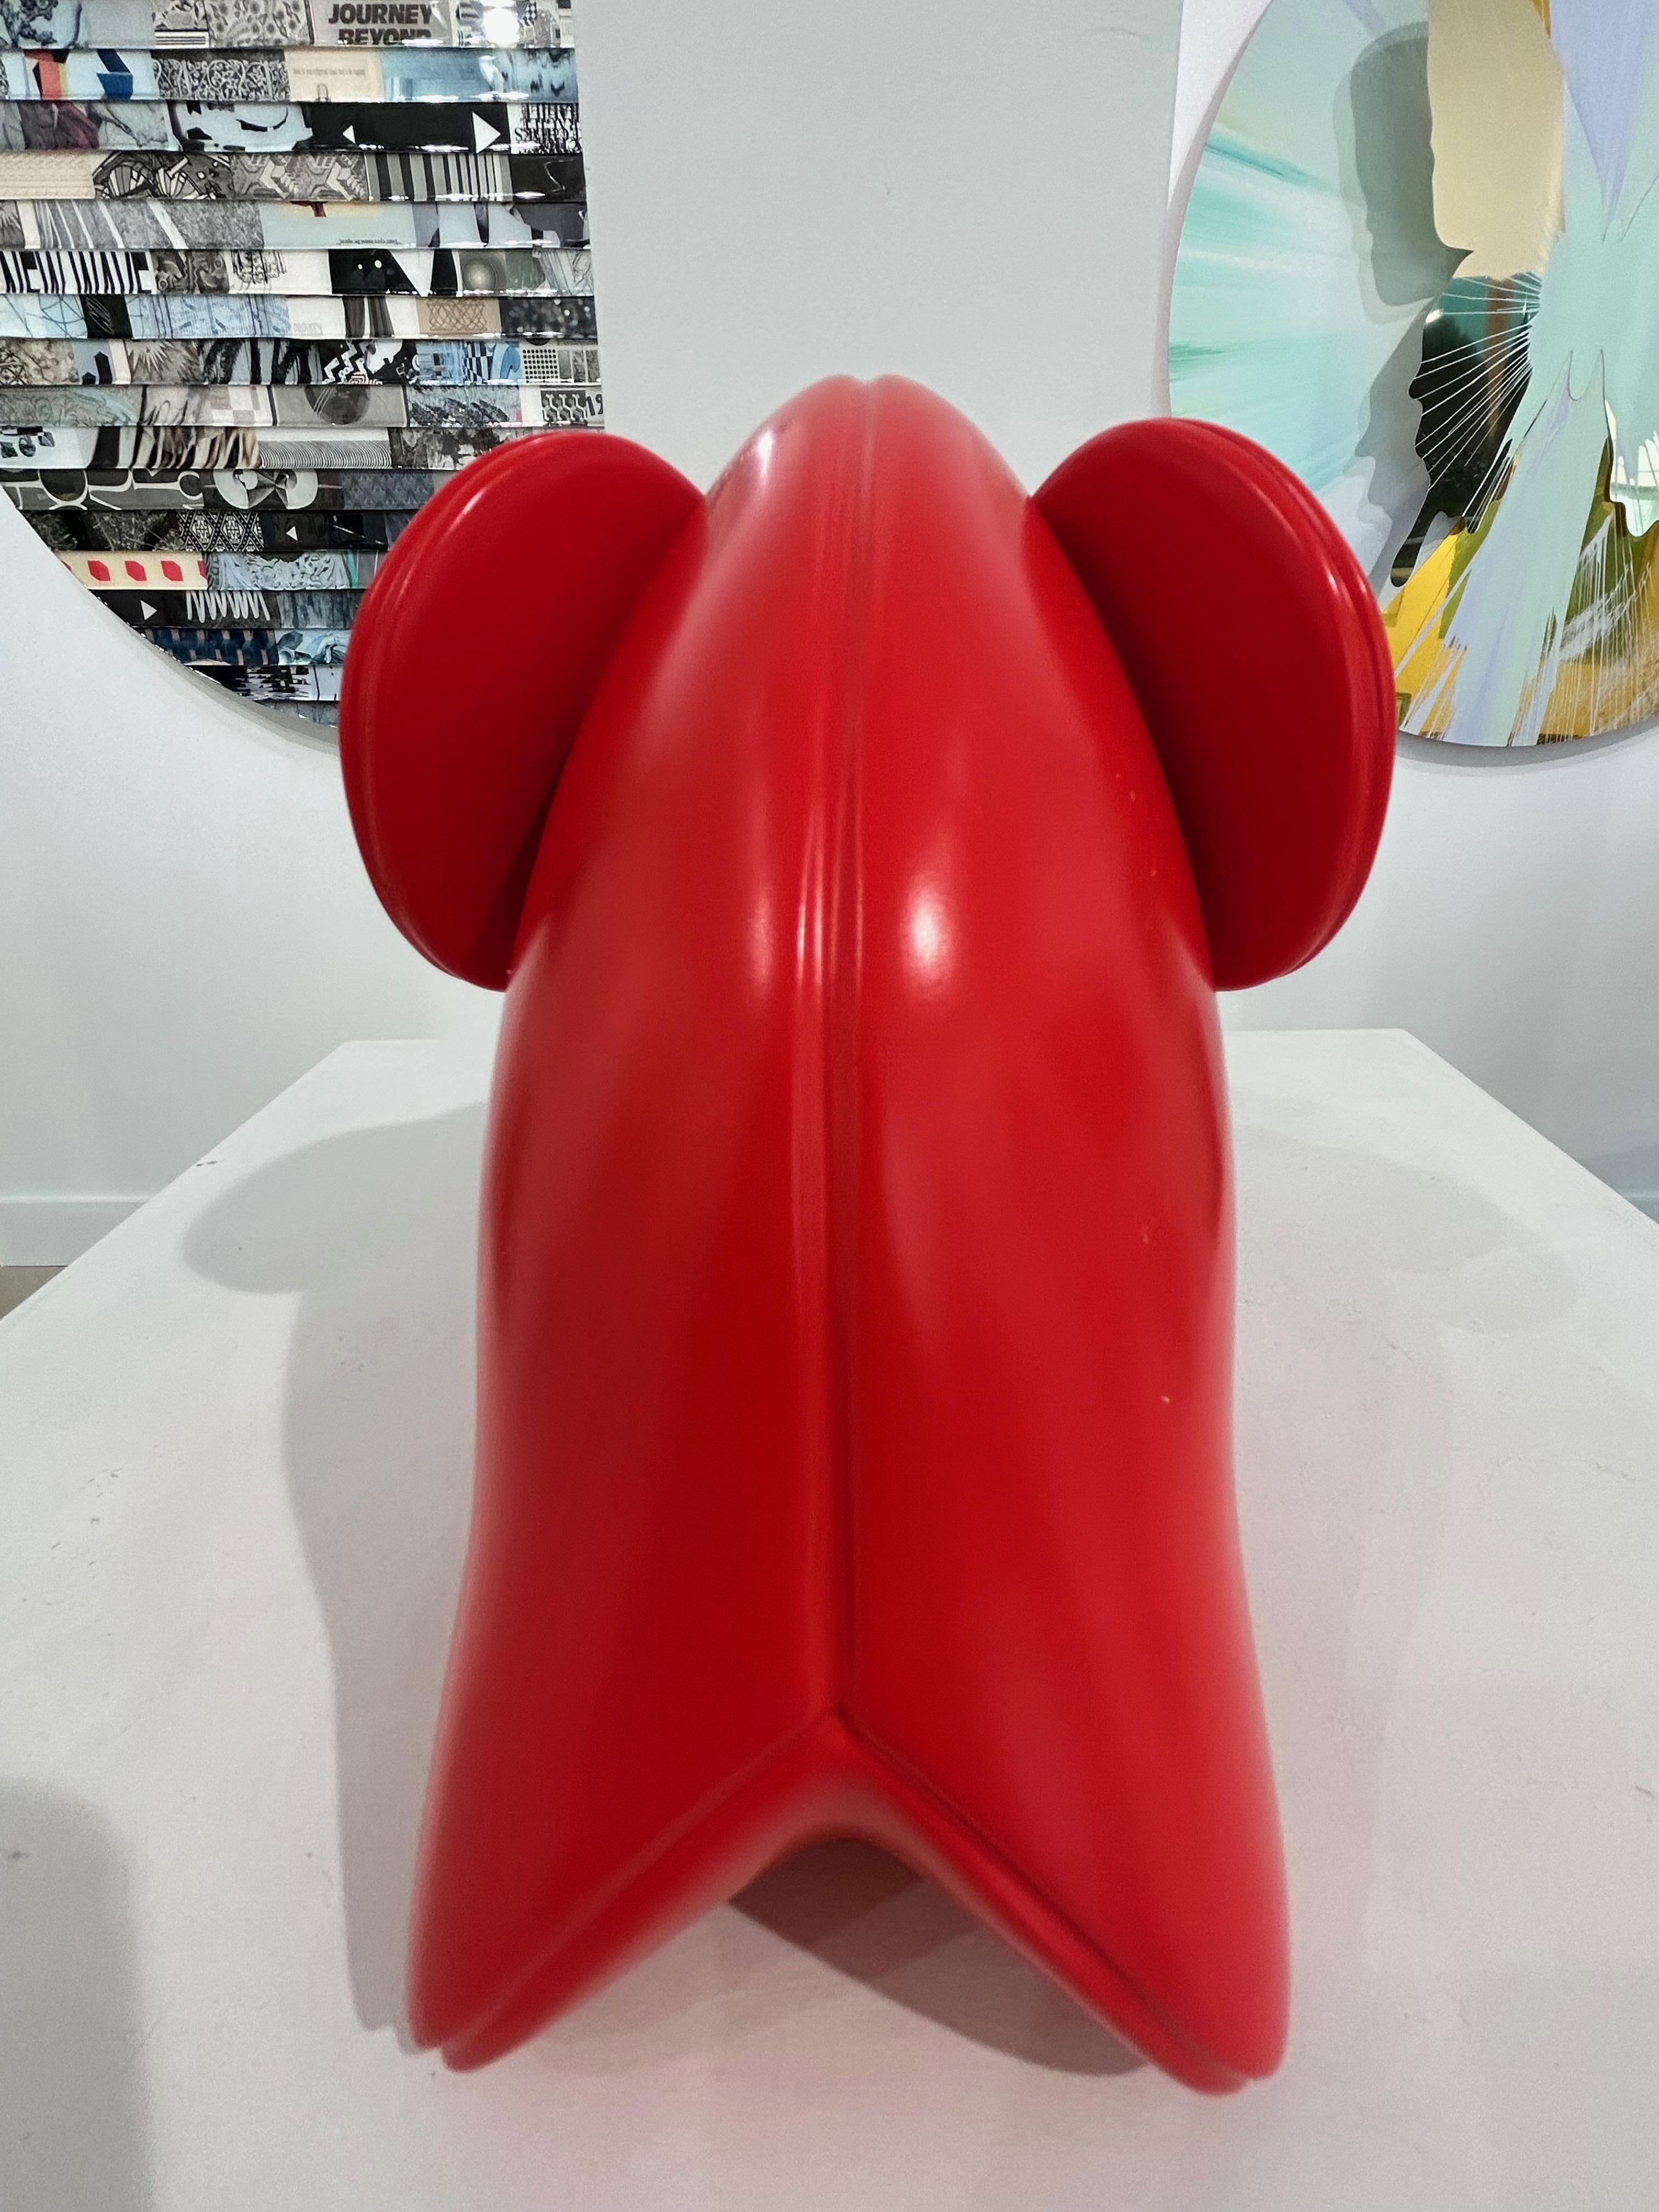 Cherry Red Pop Art Playful Luck Elephant / Christopher Schulz Sculpture For Sale 2